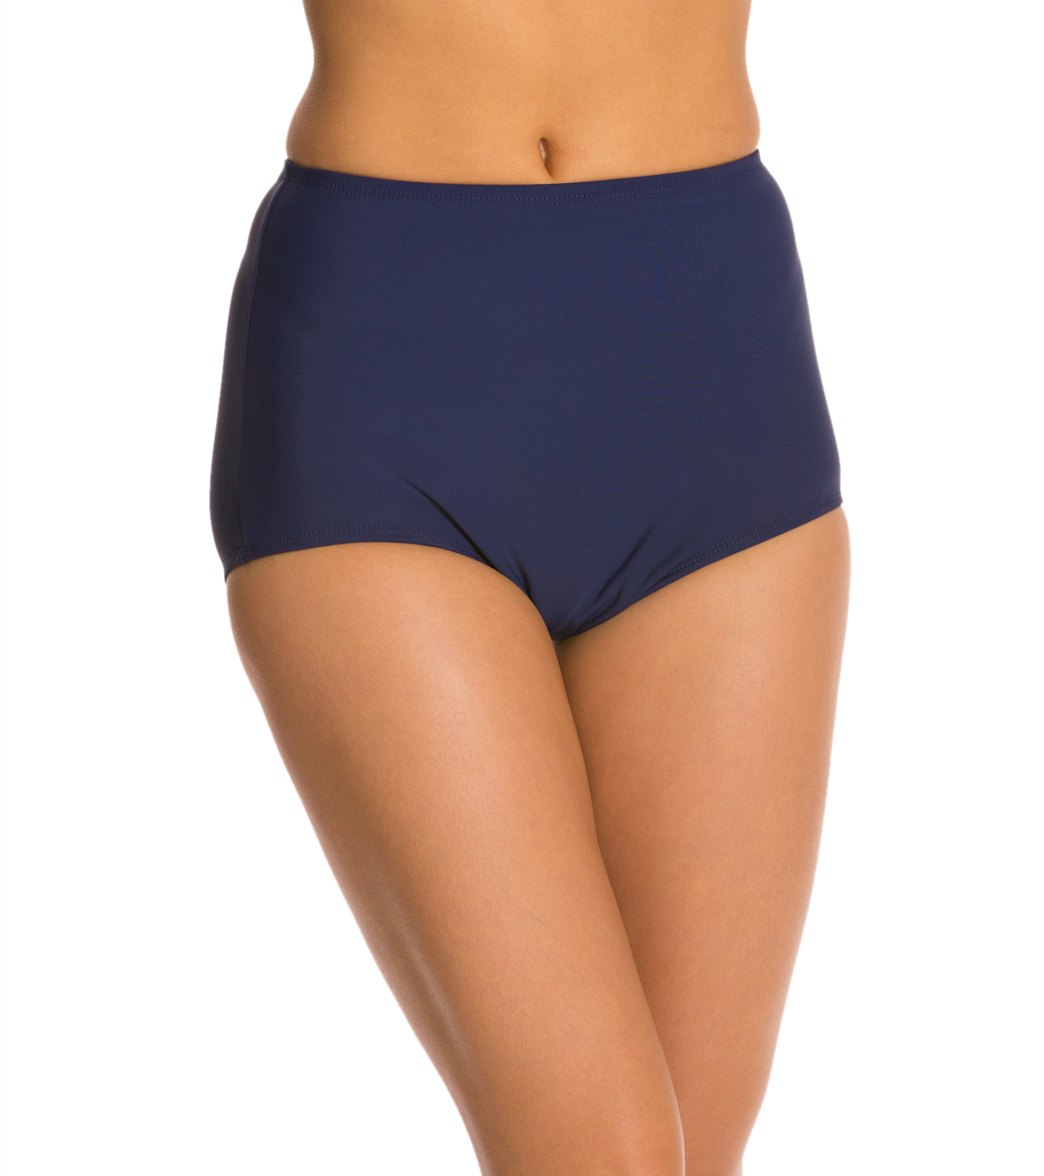 Topanga Solid Conservative Brief Bikini Bottom - Navy 10 - Swimoutlet.com